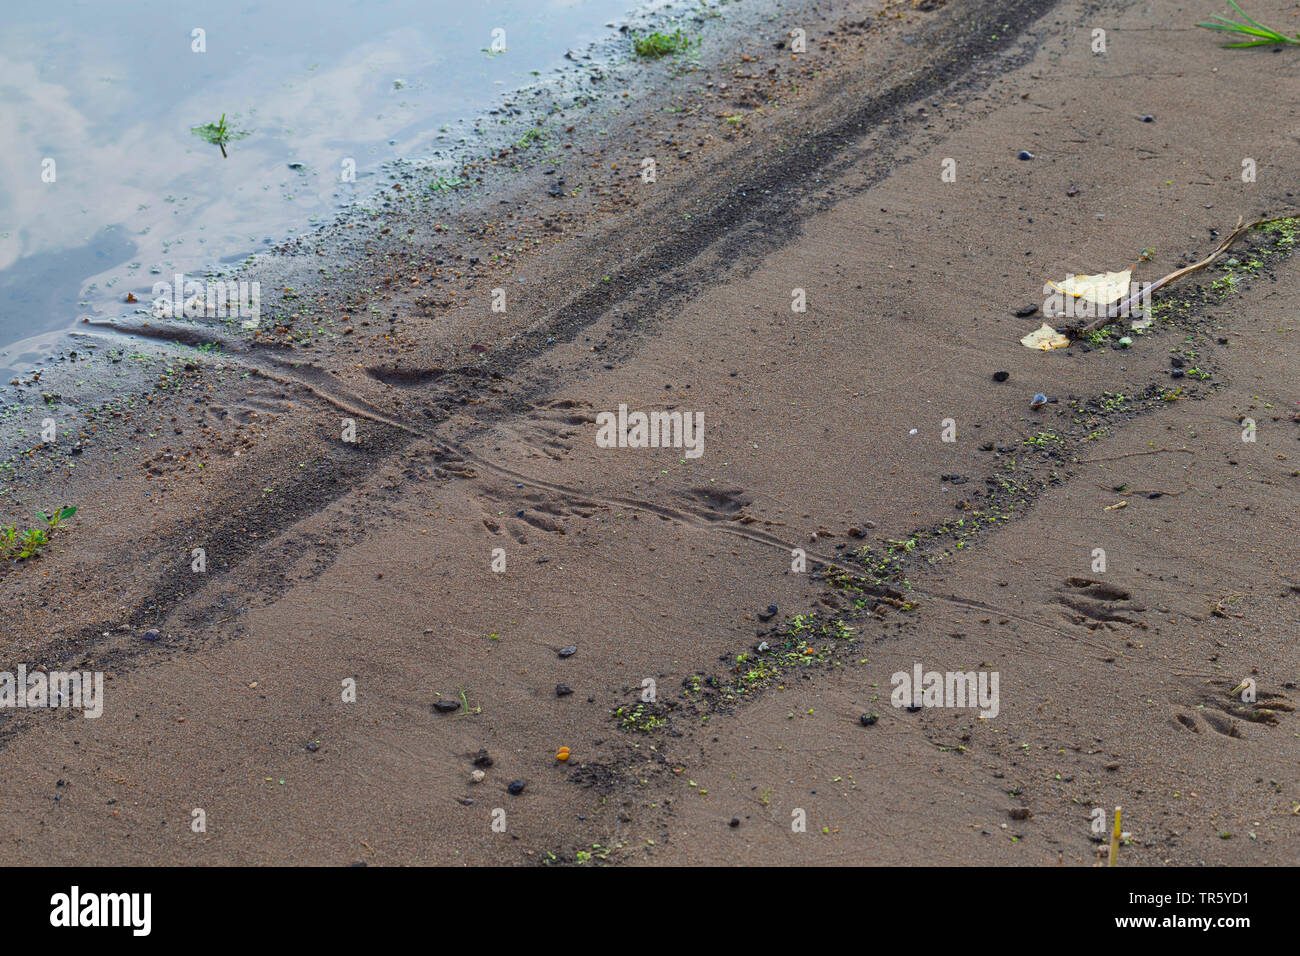 Nutrias, Nutria (Myocastor nutria), Spuren im feuchten Sand, Deutschland Stockfoto